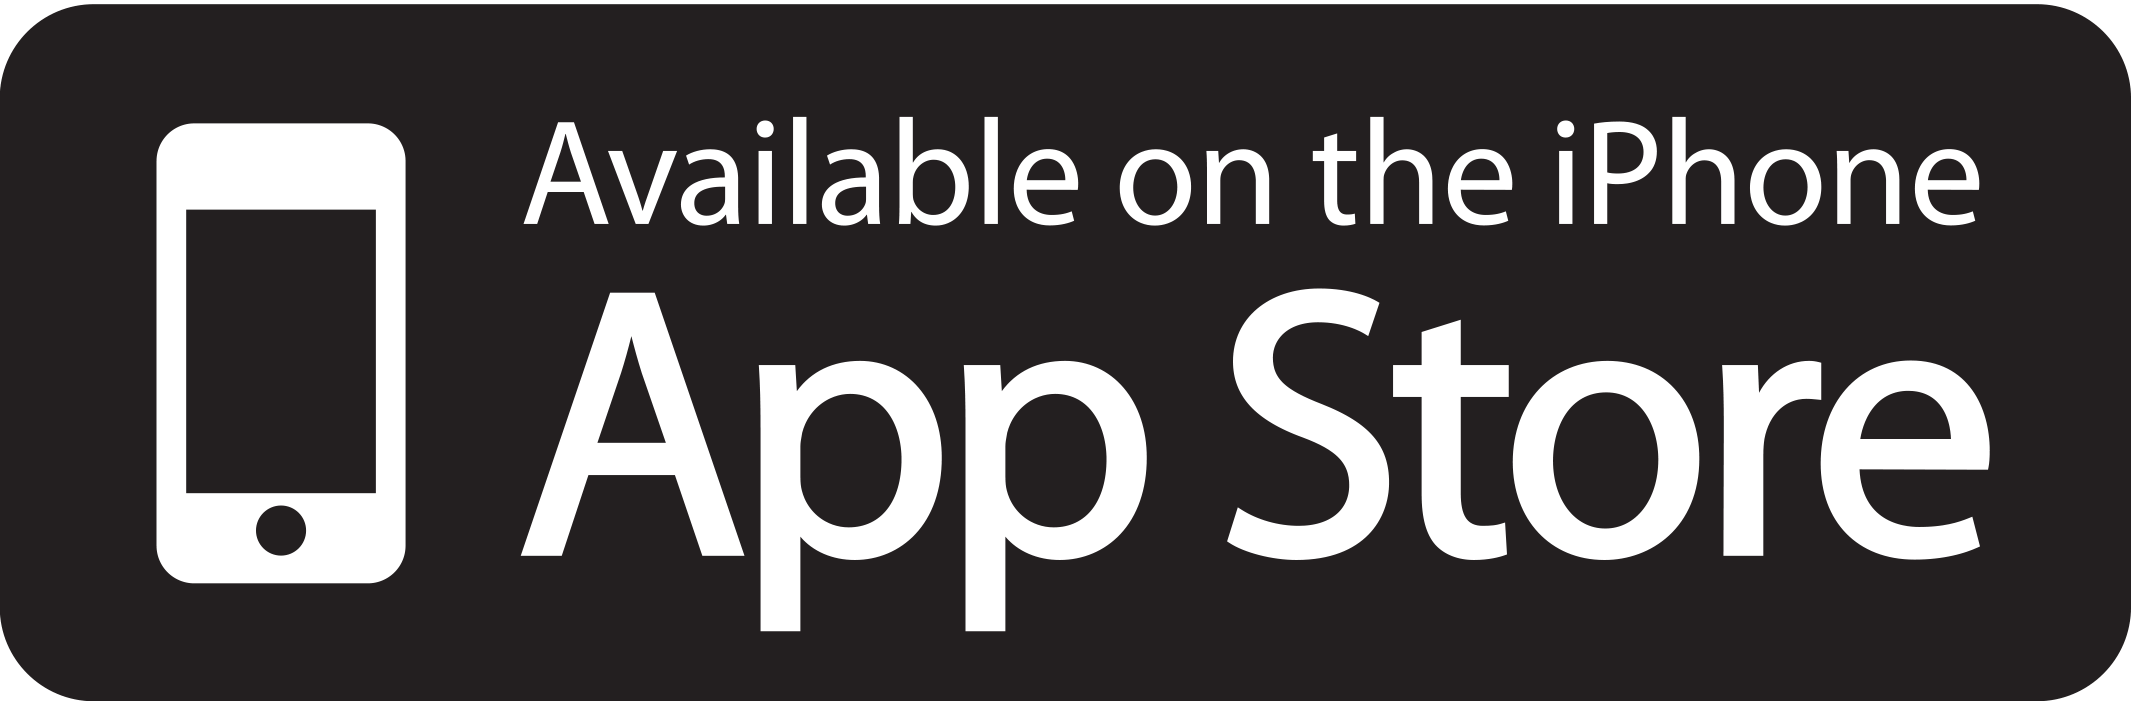 iPhone App Store Logo - Apple Store Logo